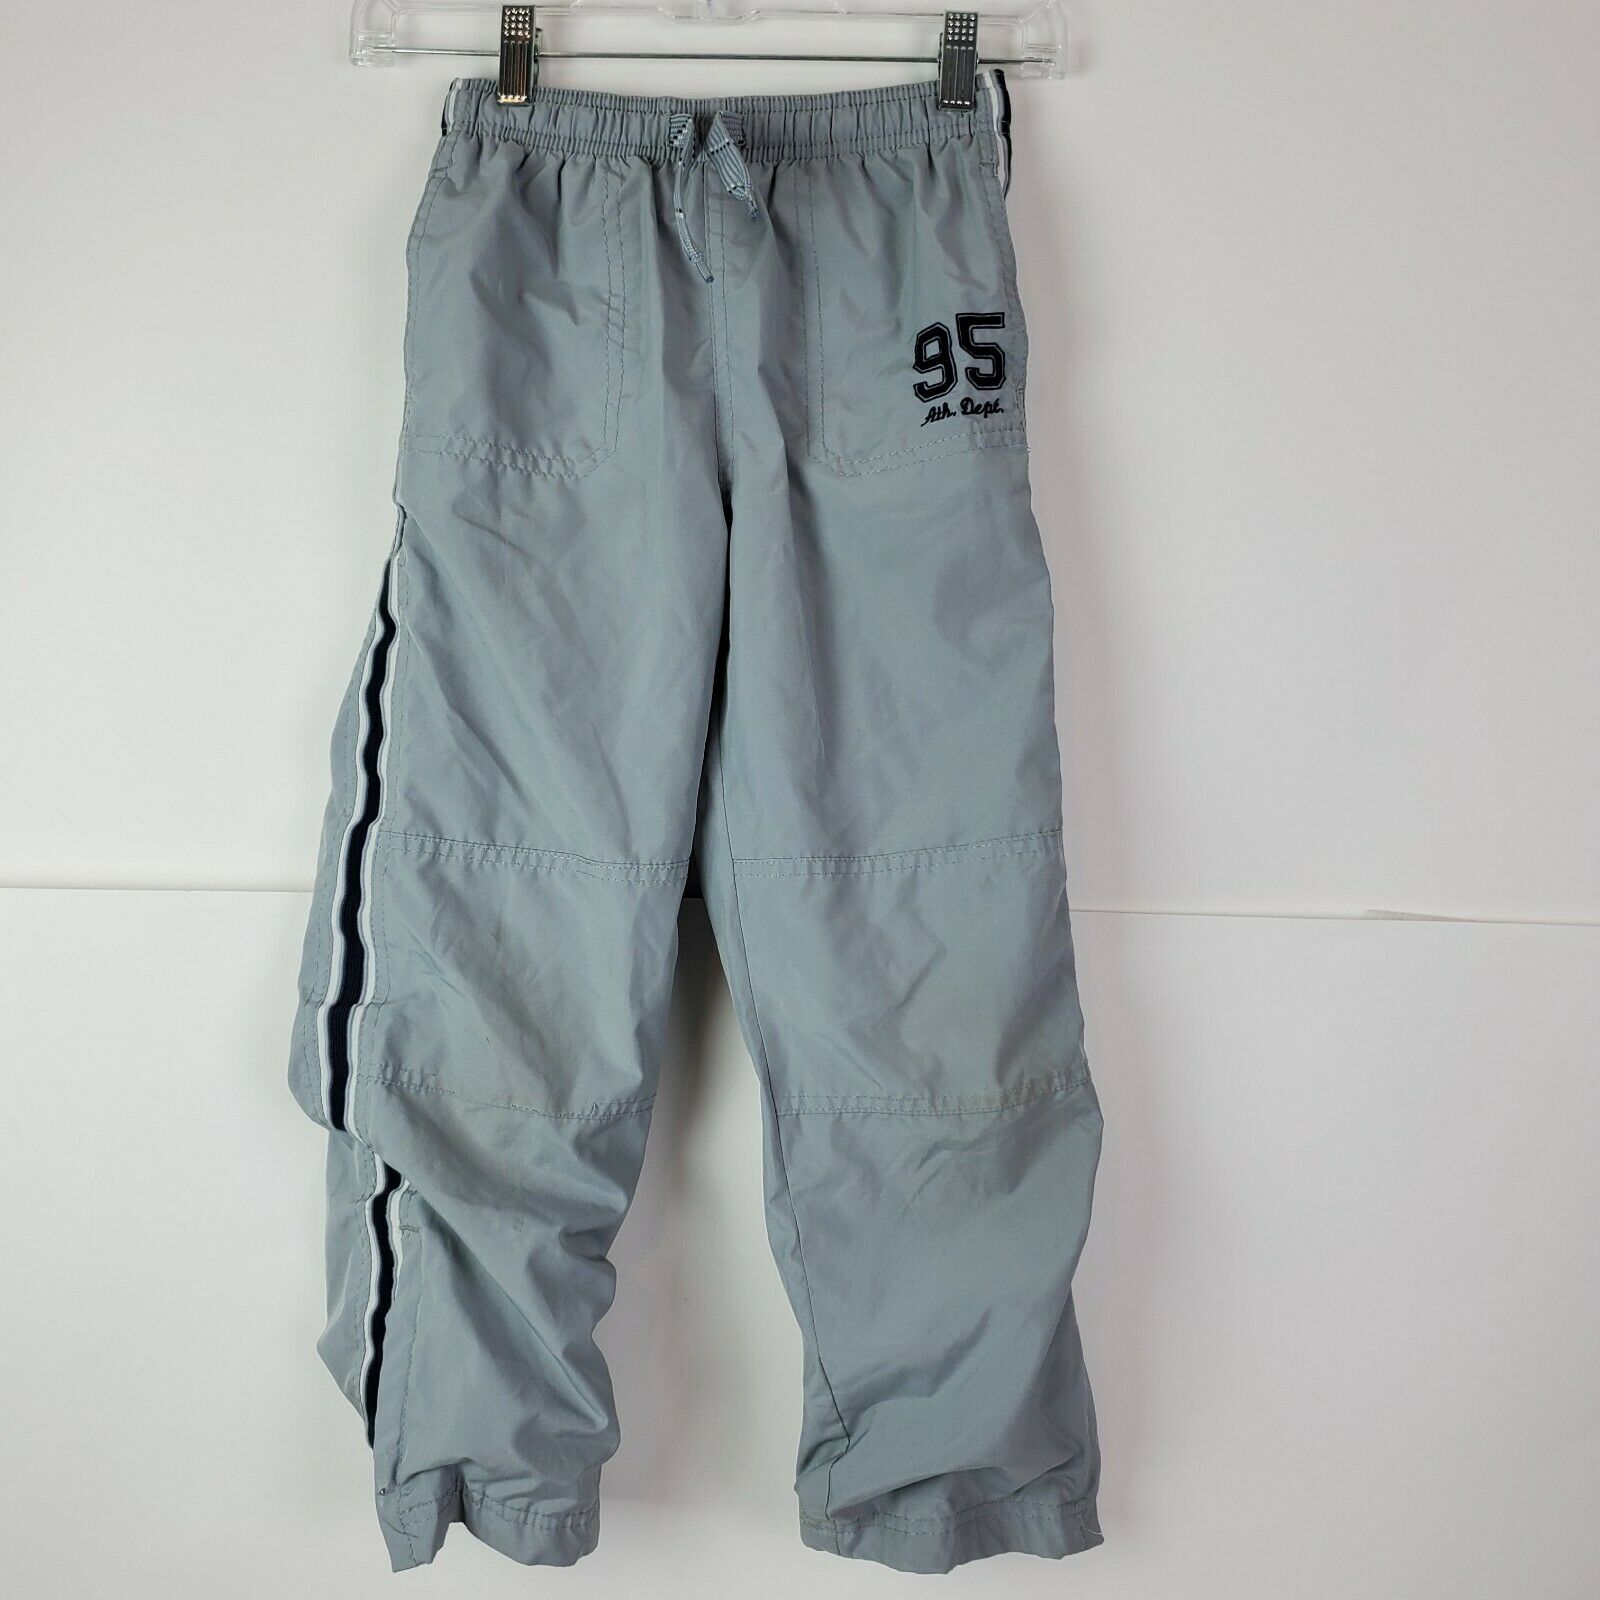 Osh Kosh B'gosh Boys Athletic Windbreaker Pants Size 8 Gray Cotton Lining